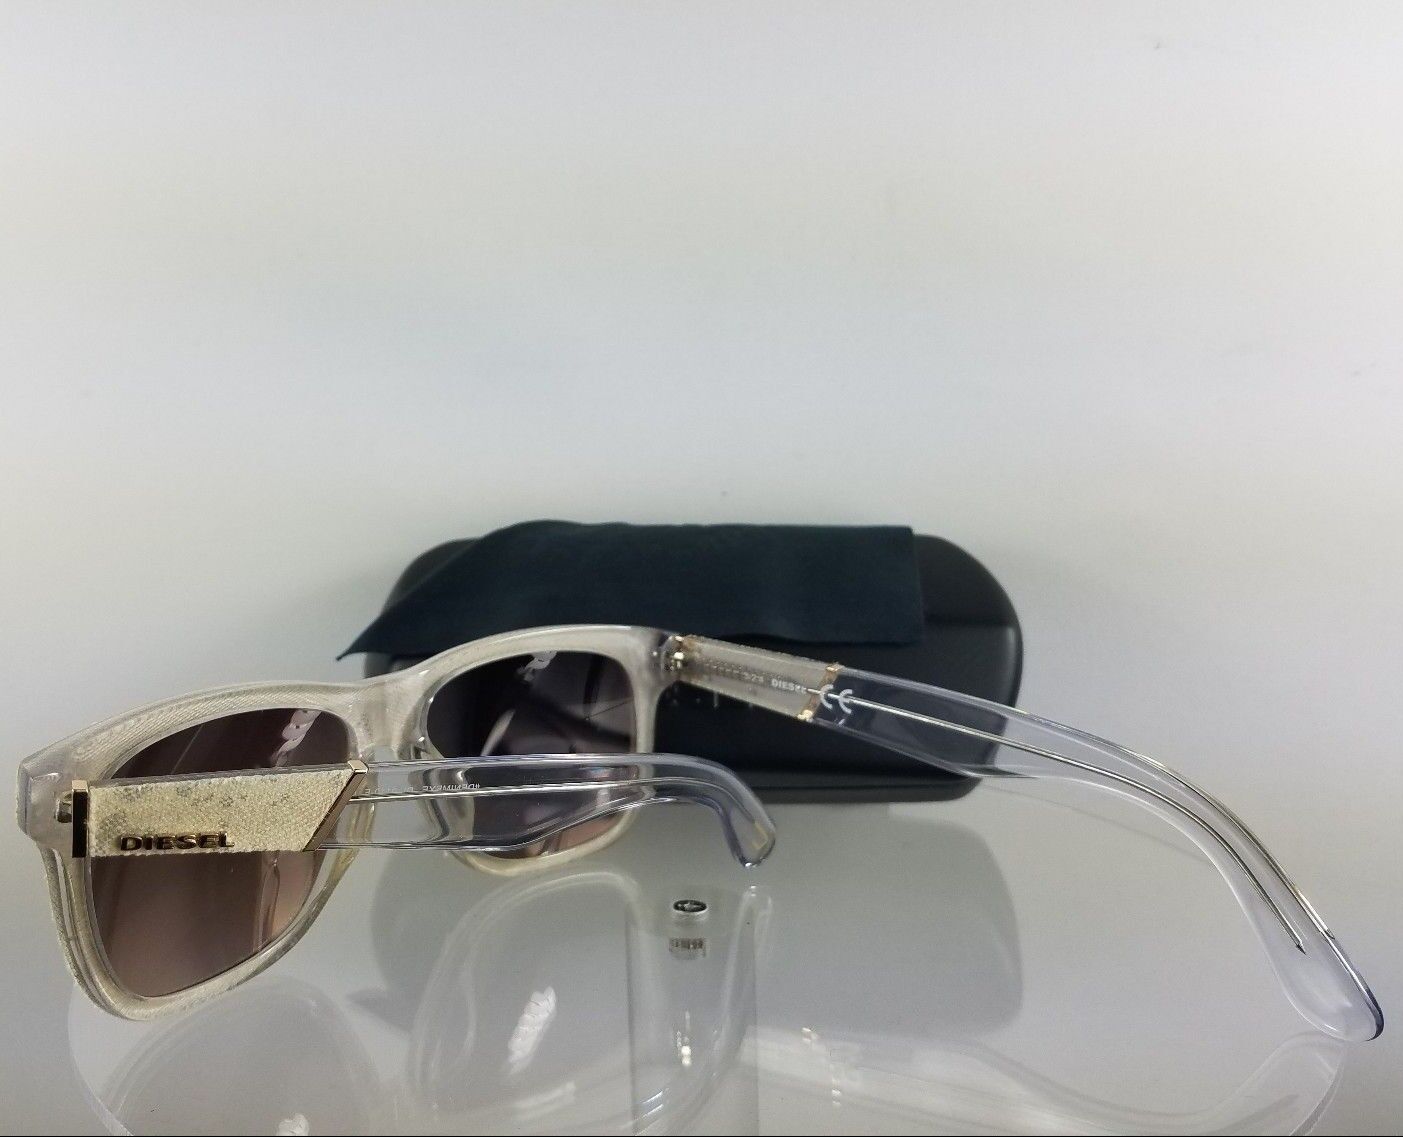 Brand Authentic Brand New Diesel Sunglasses DL 0140-F Col. 27L 56mm #Denimeye